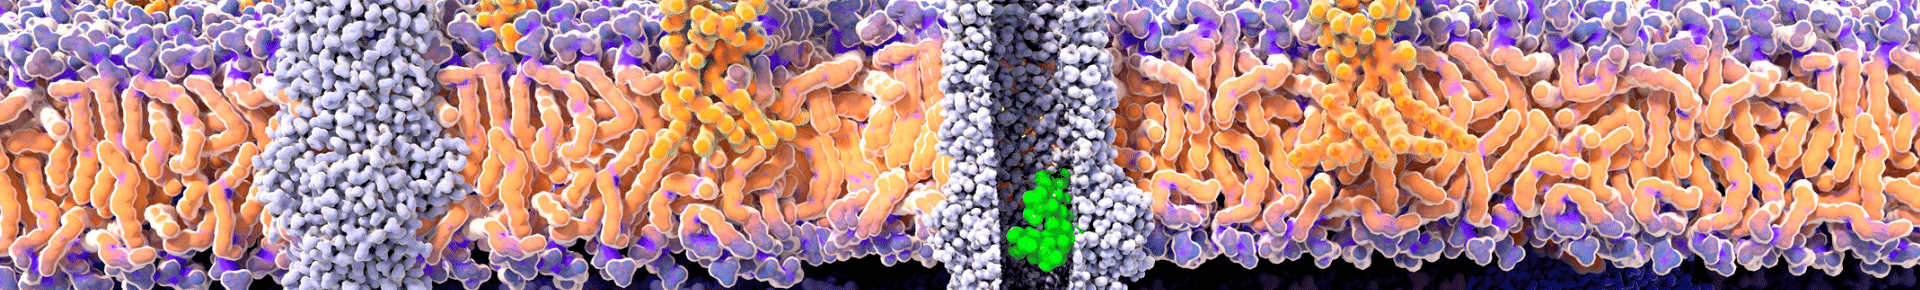 A digital illustration of antibacterial resistance